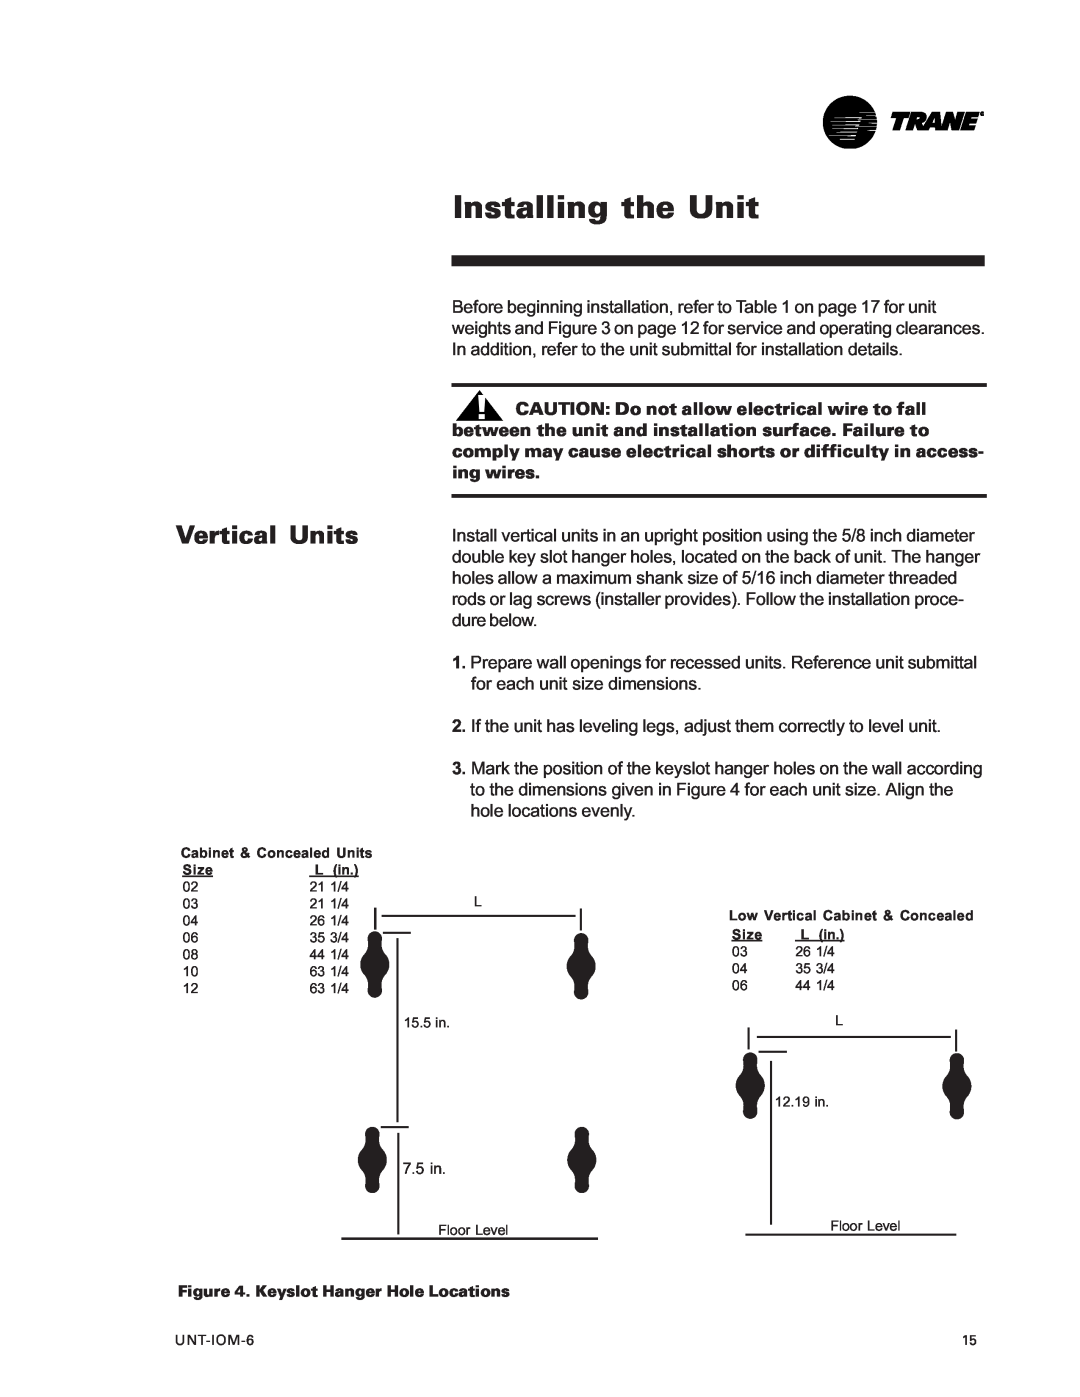 Trane LO manual Installing the Unit, Vertical Units 